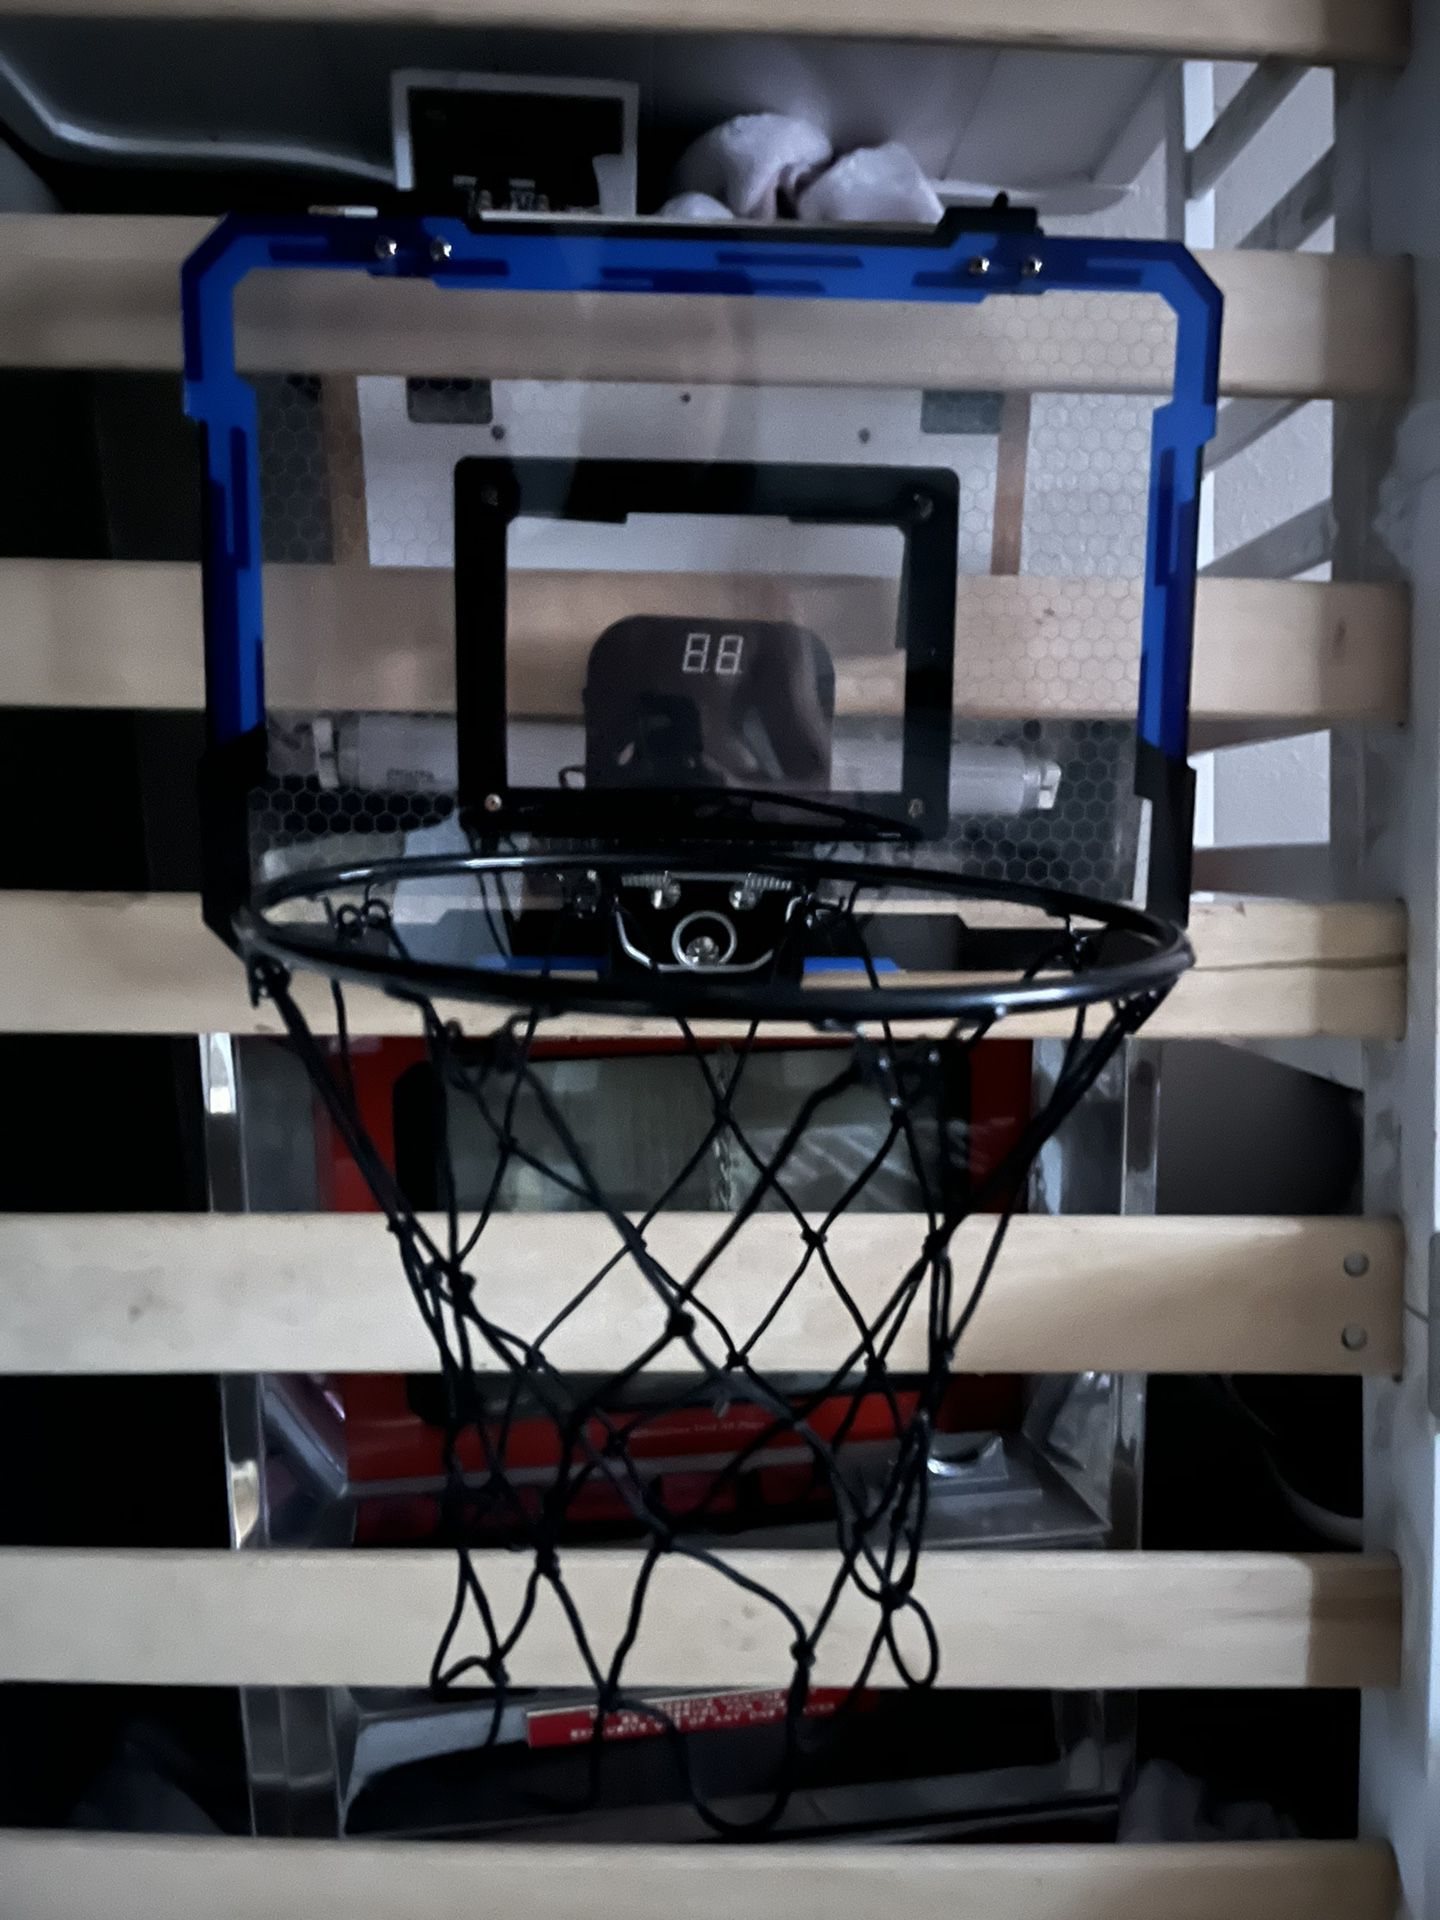 Electrical Basketball Mini Hoop